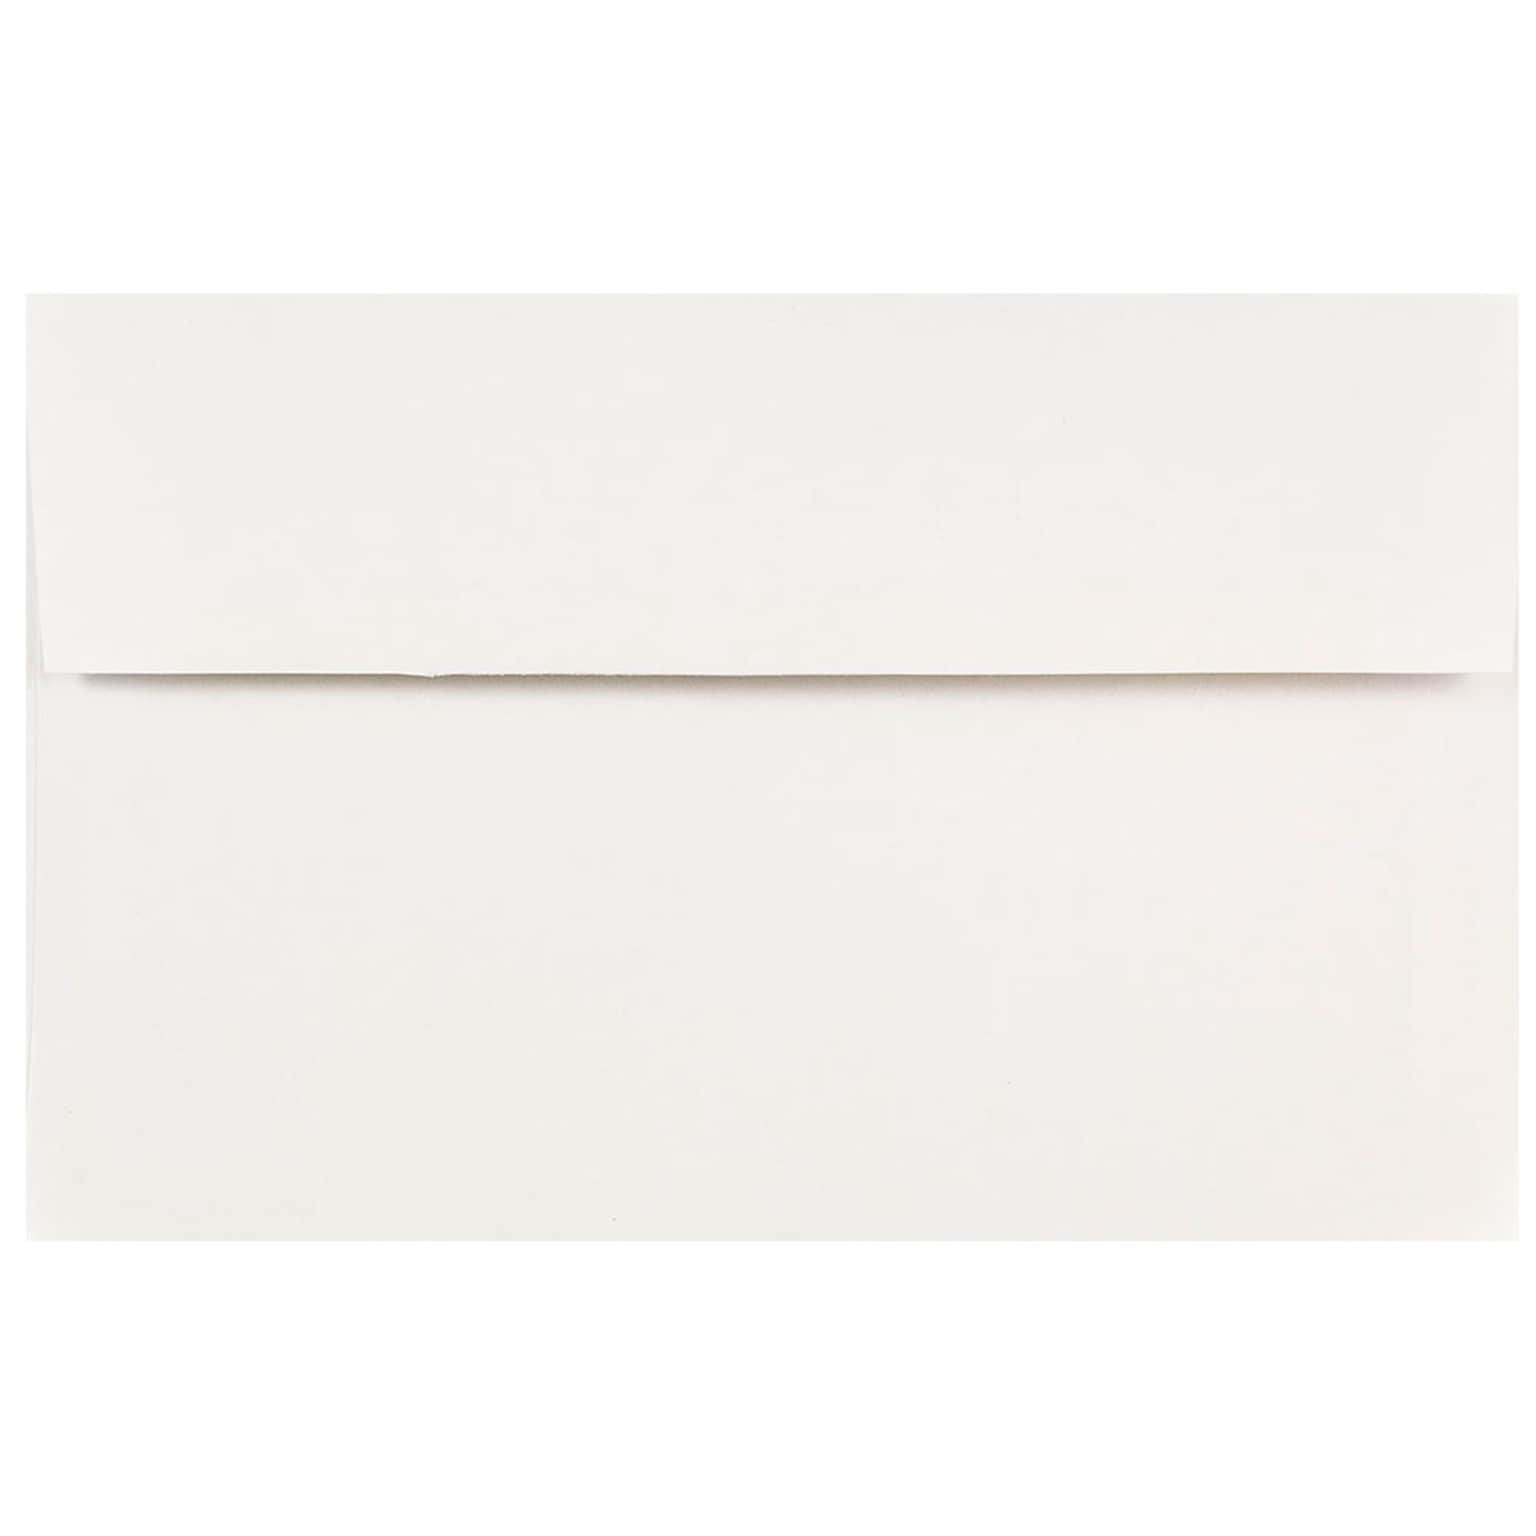 JAM Paper A10 Invitation Envelope, 6 x 9 1/2, White, 1000/Carton (12039B)